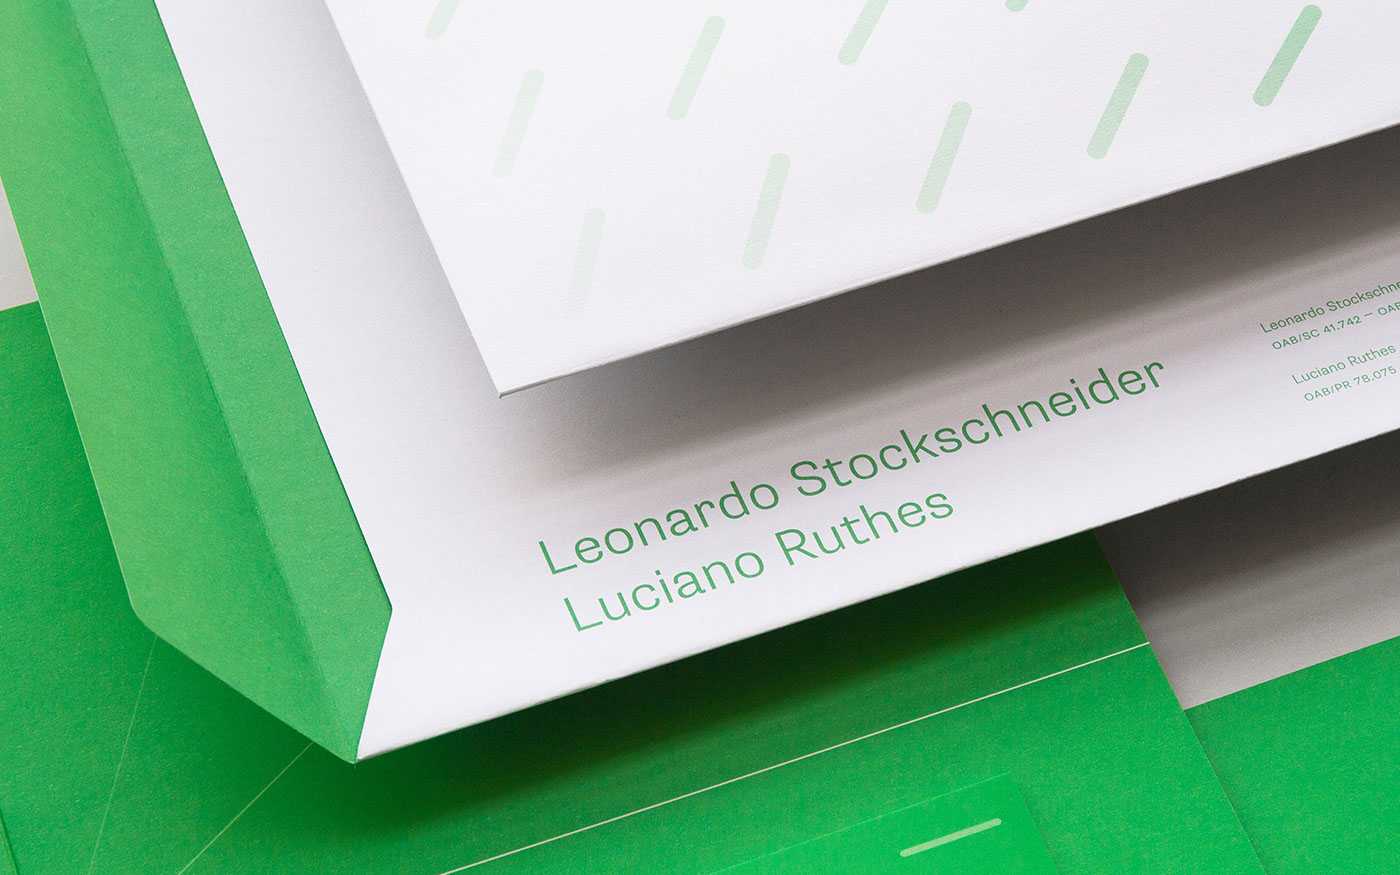 Leonardo Stockschneider and Luciano品牌VI设计欣赏-深圳VI设计11